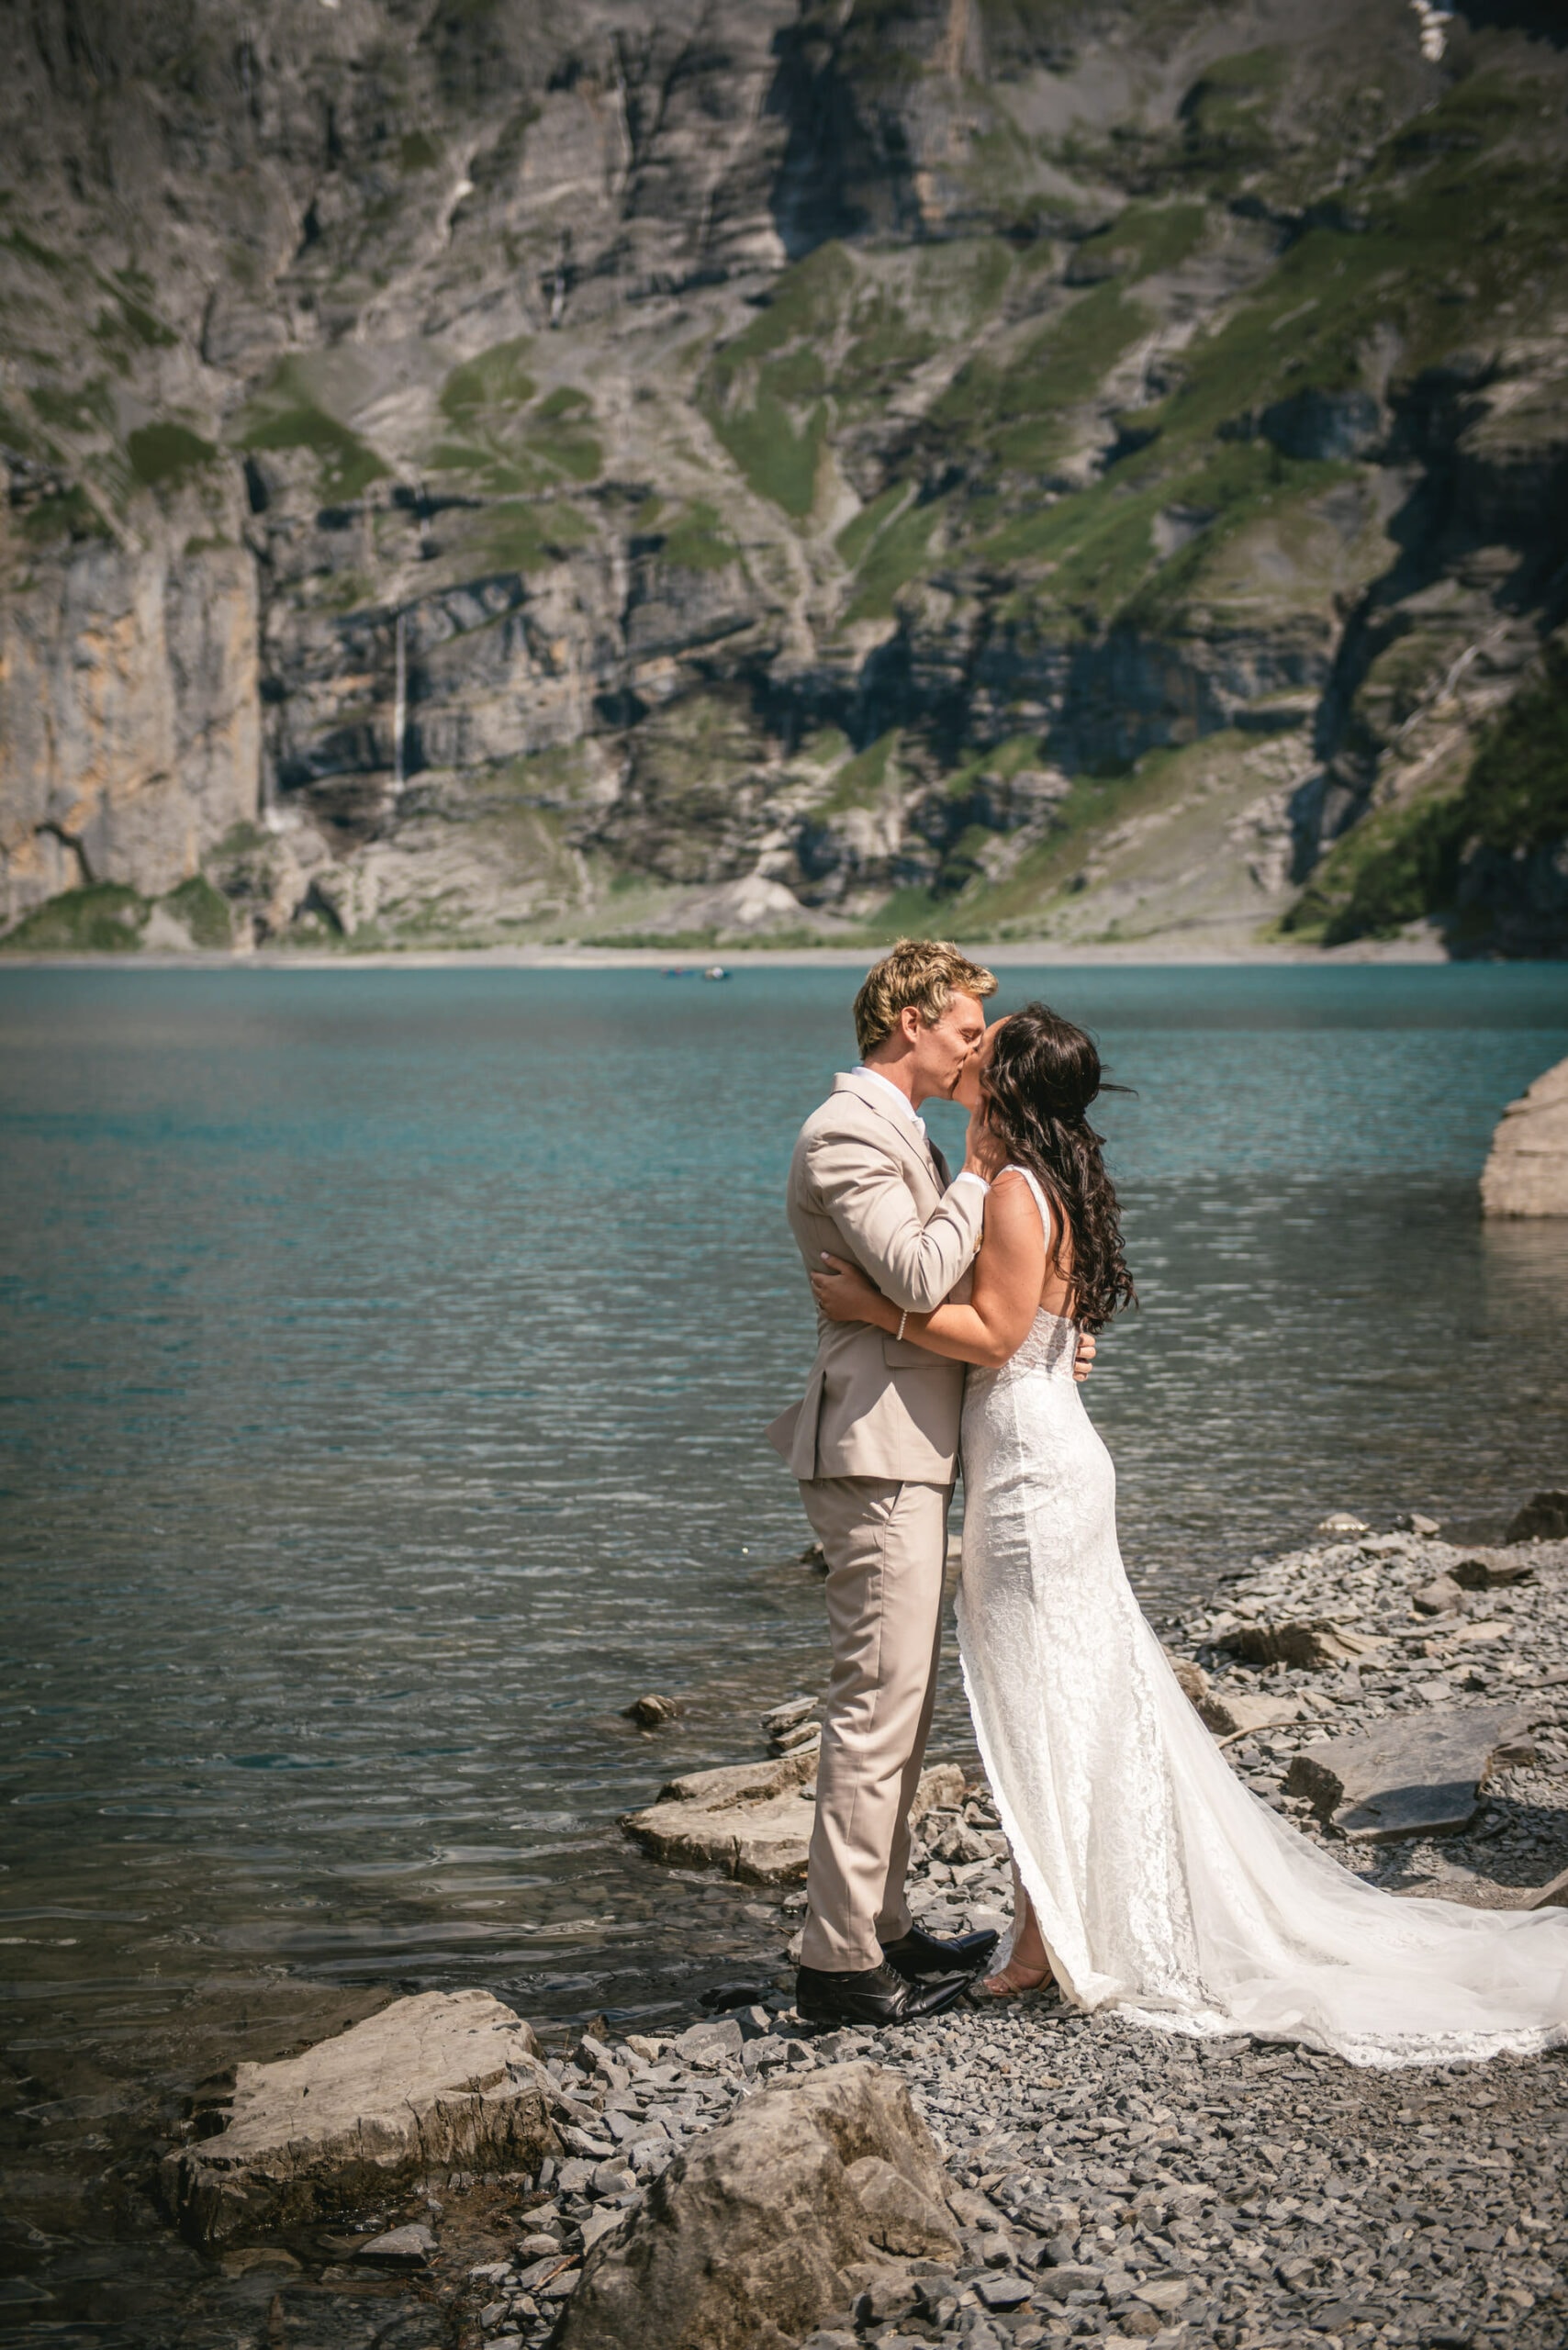 Uncharted love, alpine trails - hiking elopement in Switzerland.